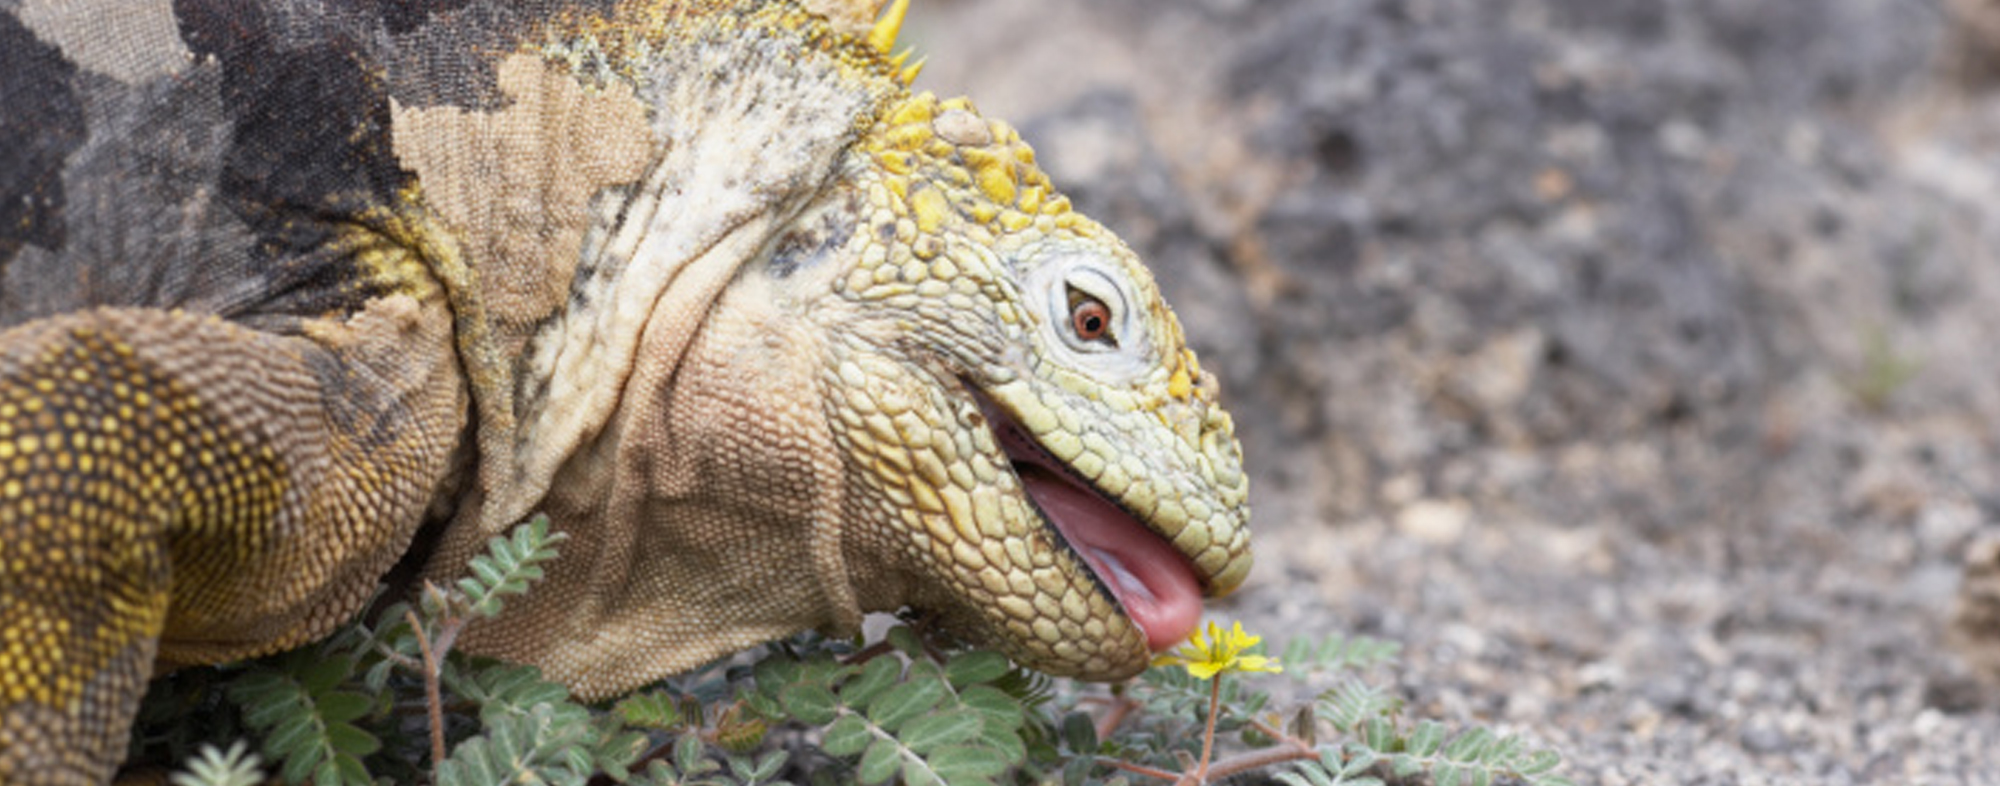 Corncob colored prehistoric pet lizard licking a yellow dandelion